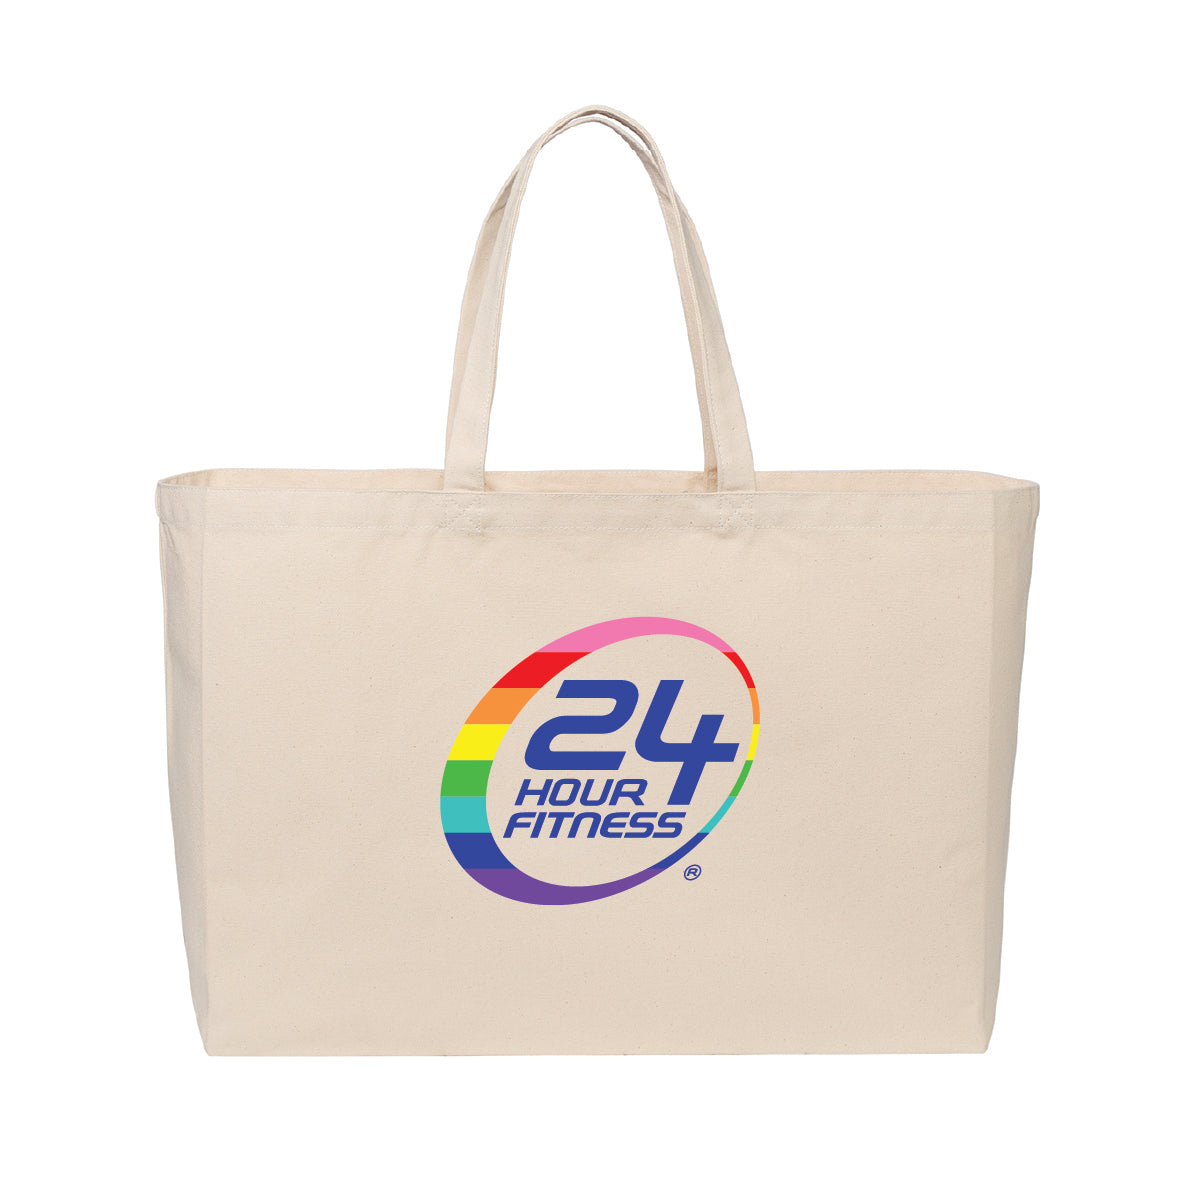 RAINBOW24 Tote Bag